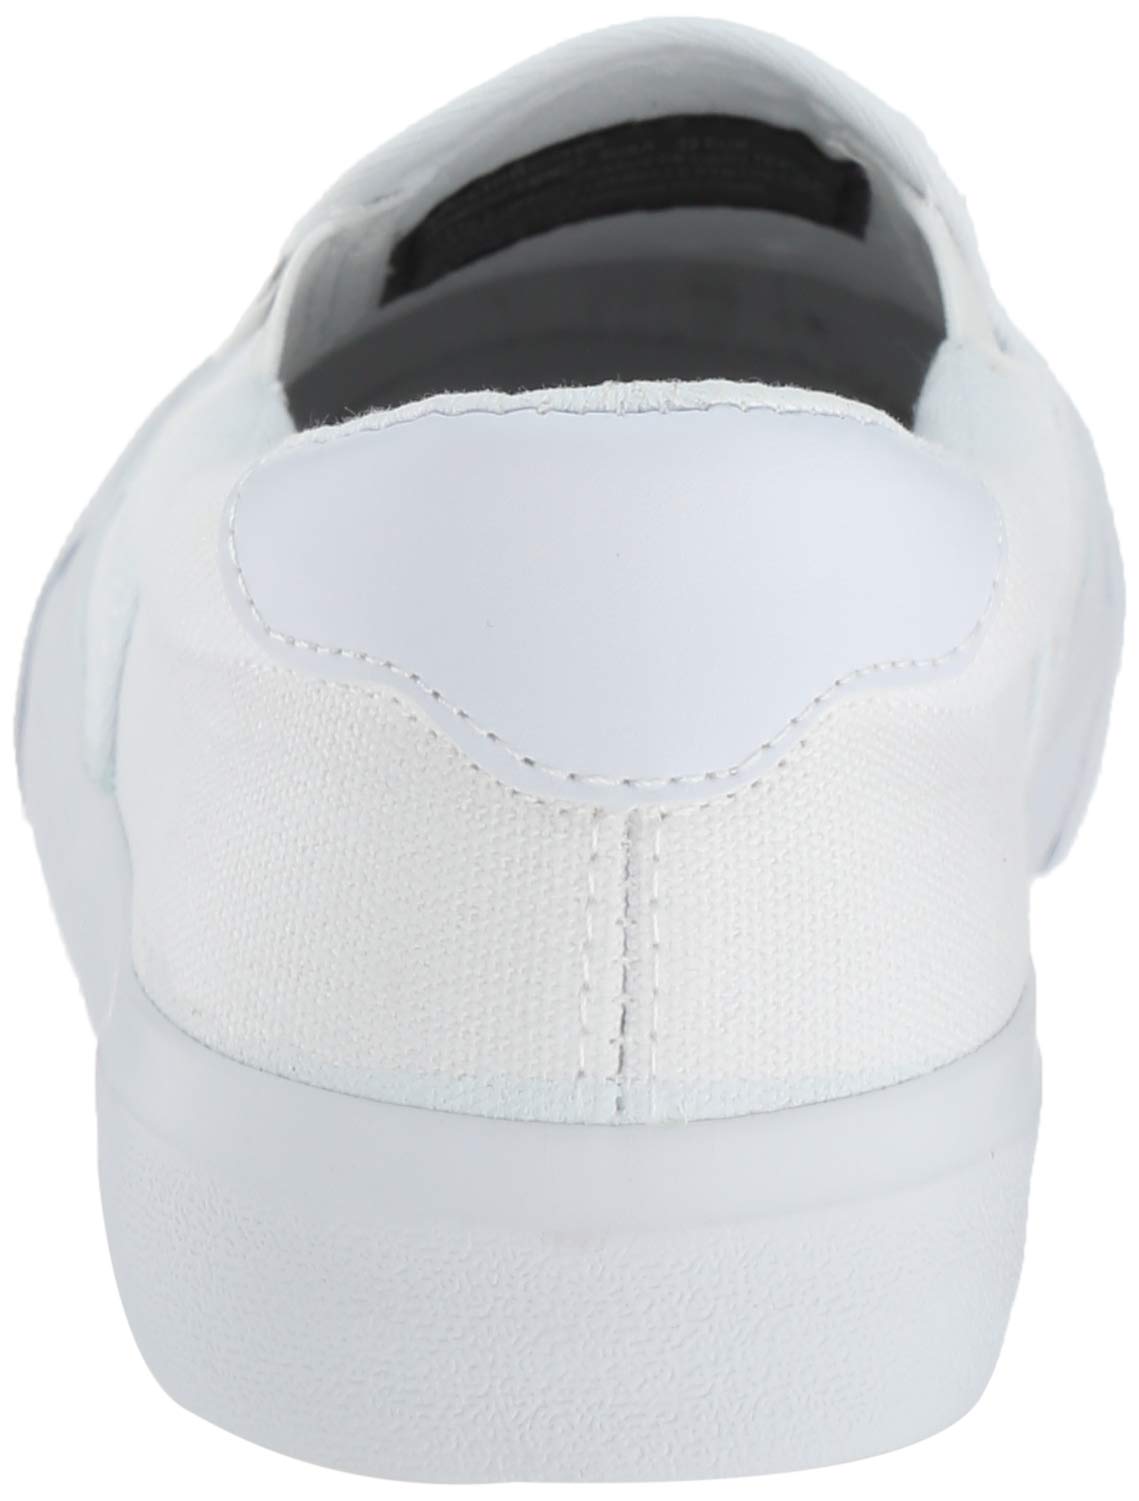 Lugz womens Clipper Fashion Sneaker, White/White, 8.5 Wide US